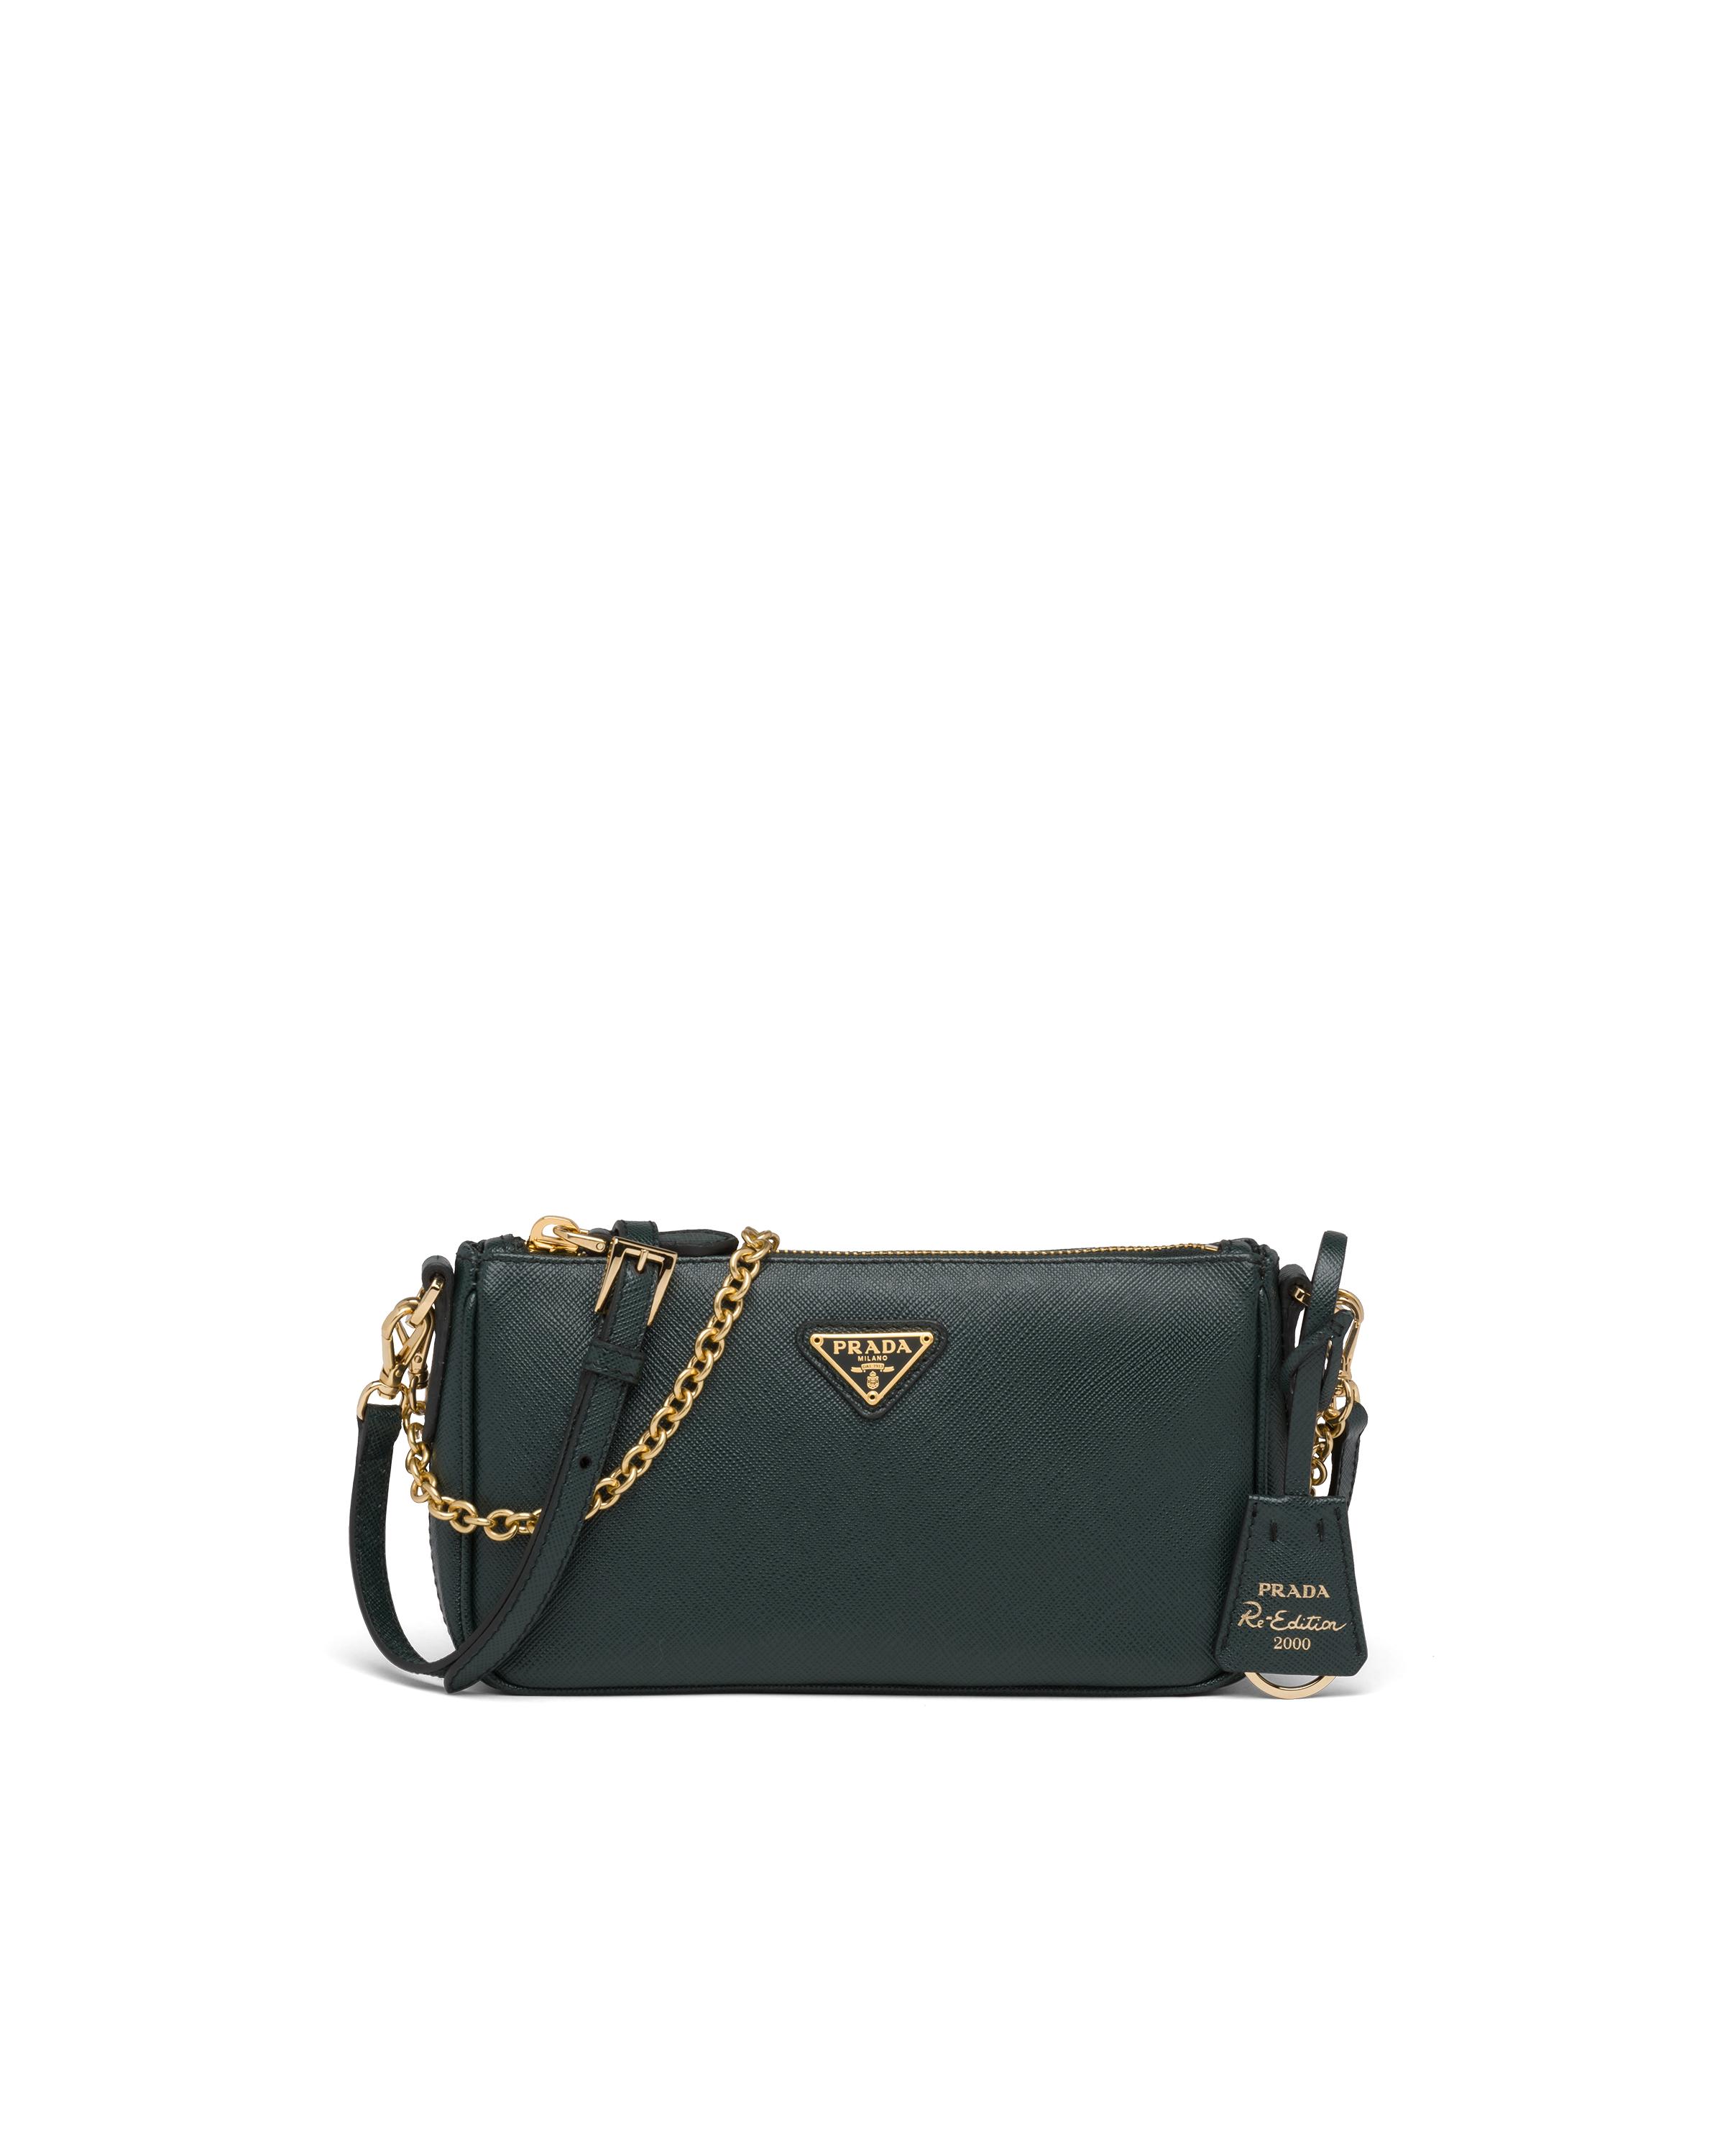 Prada Re-edition 2000 Shoulder Bag in Green | Lyst